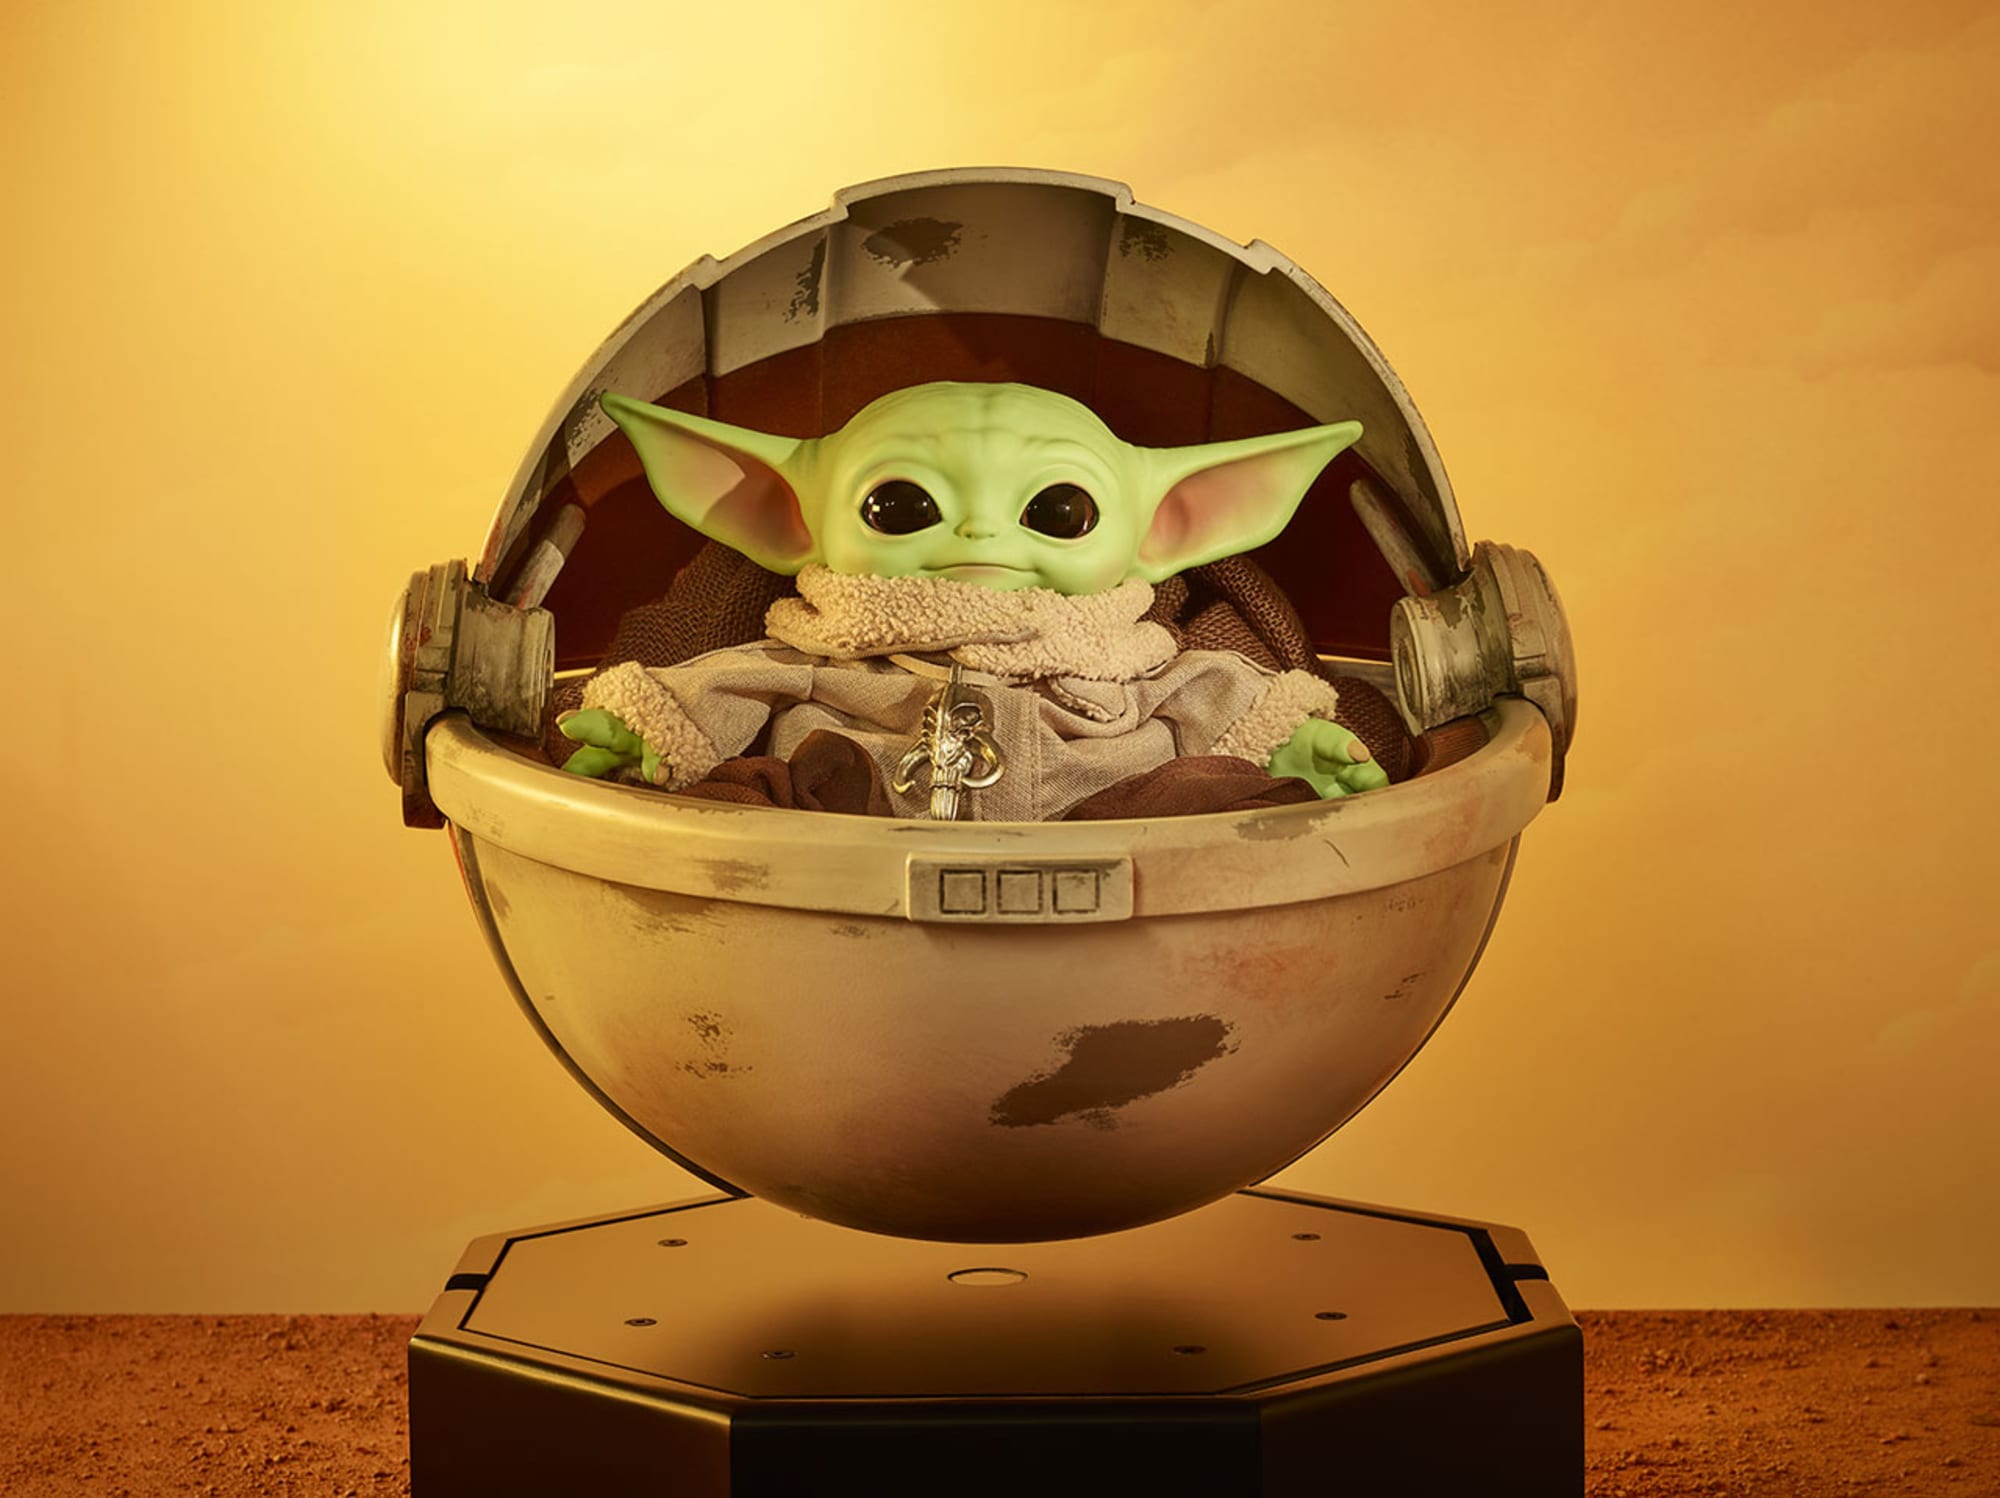 The Mandalorian Baby Yoda by Visual Fear on Dribbble